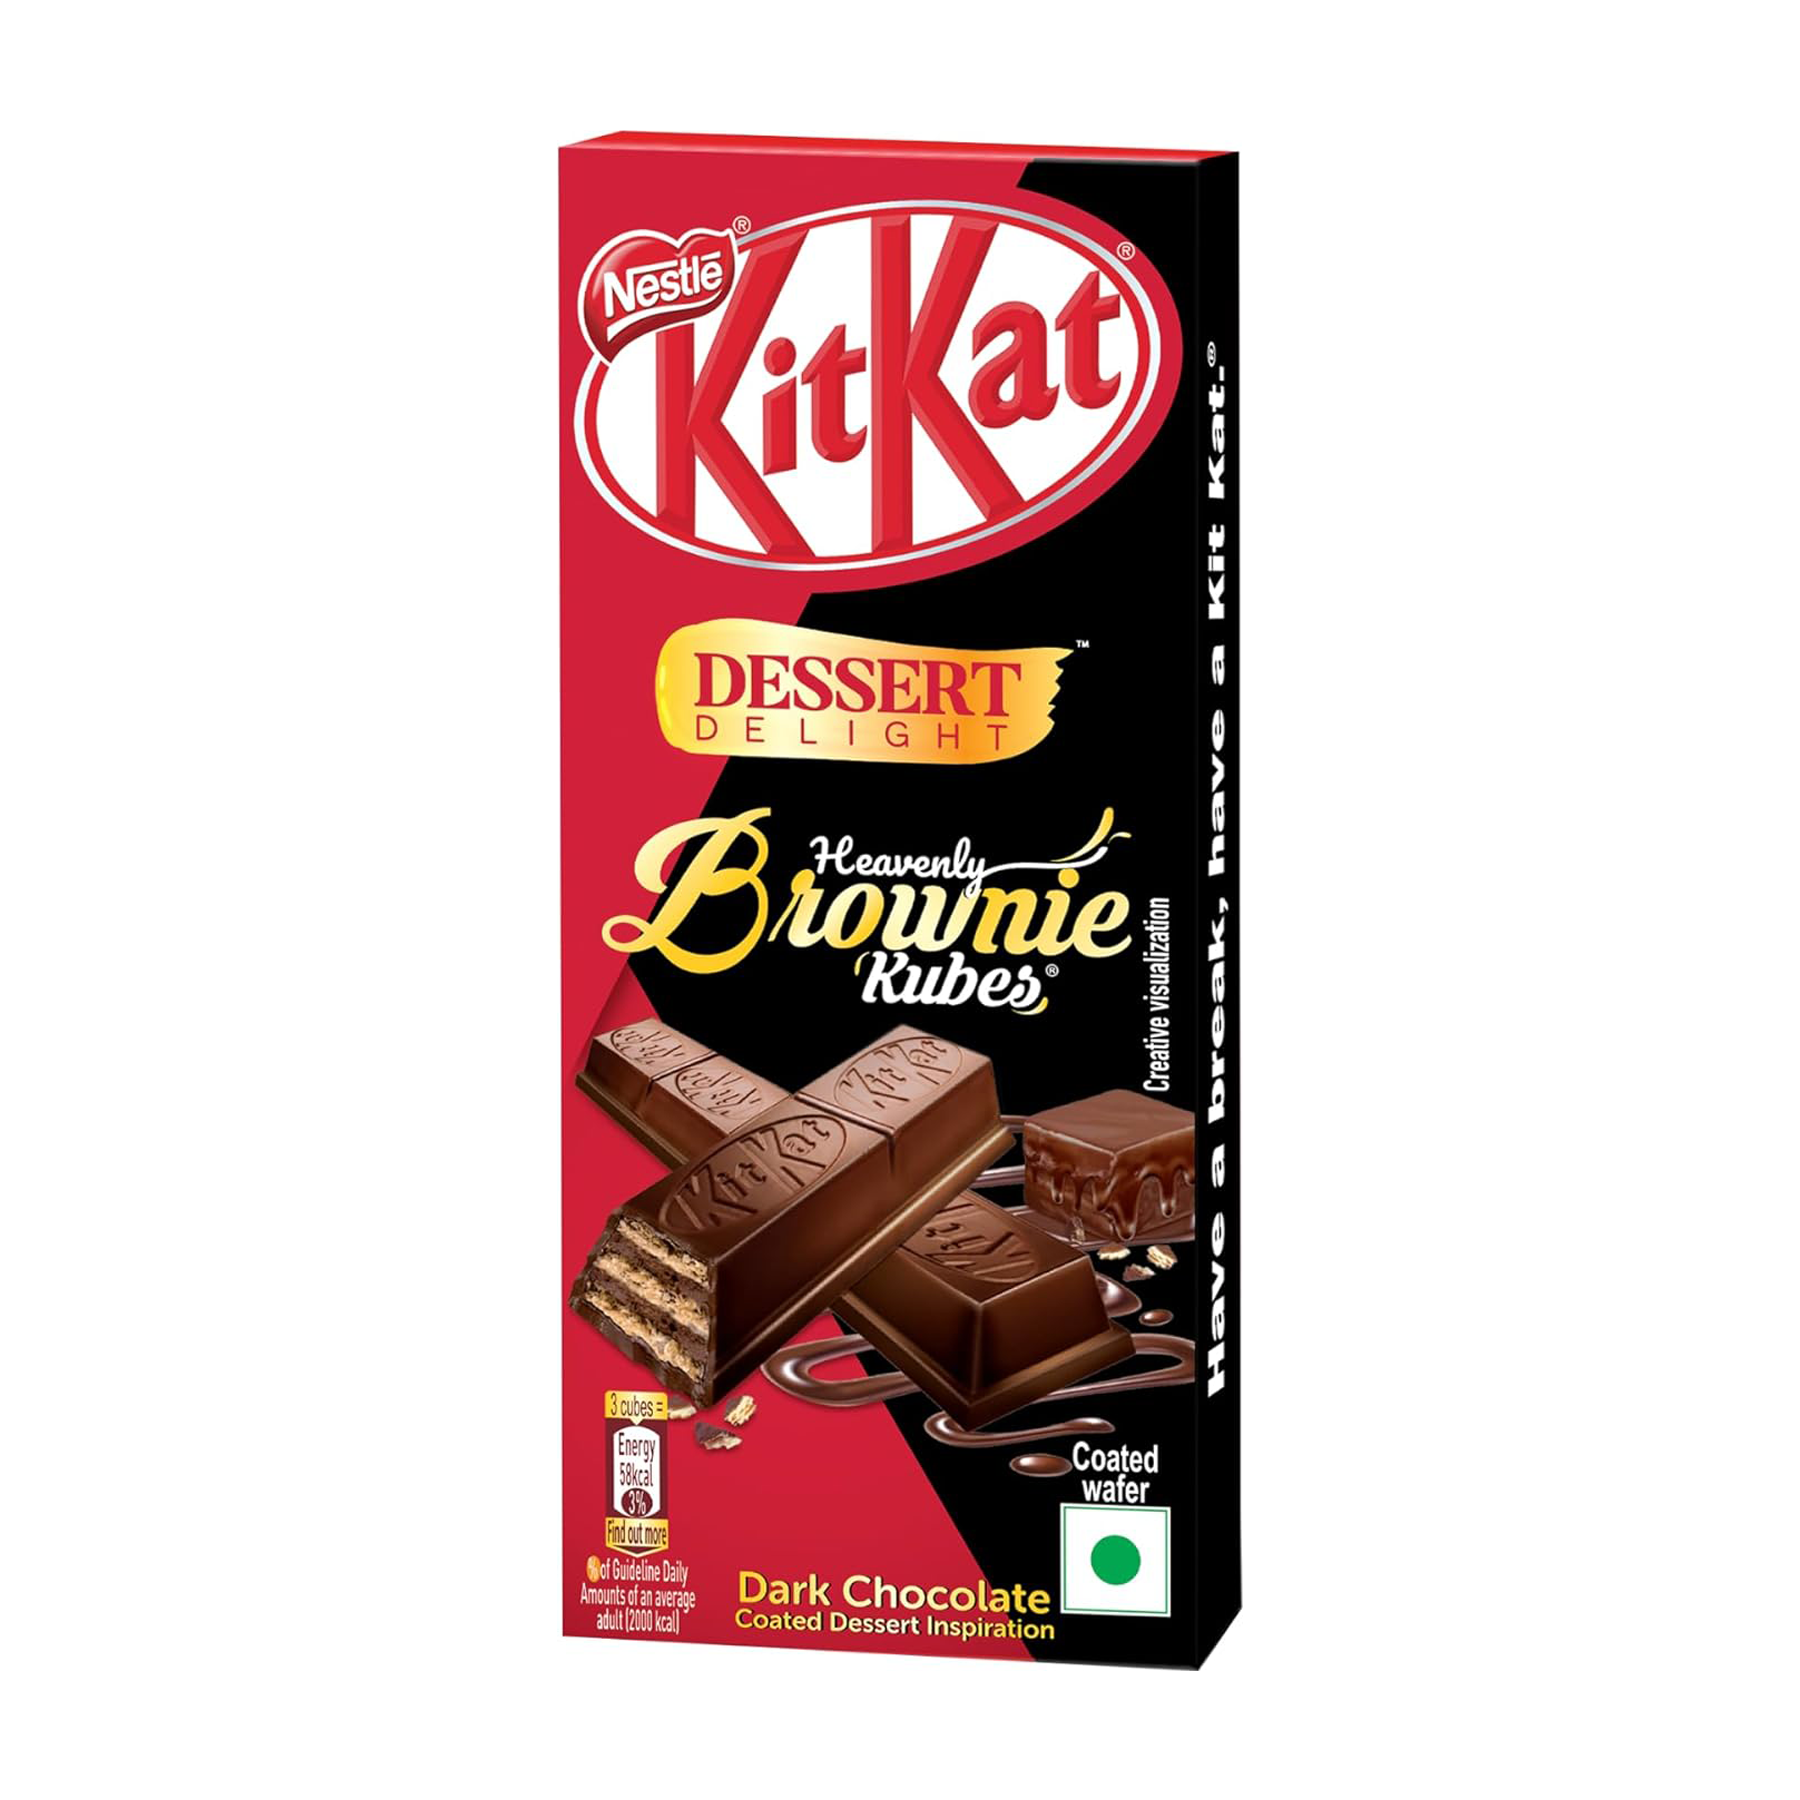 Nestle Kitkat Dessert Delight Brownie Kubes Wafer Coated Dark Chocolate (50G)